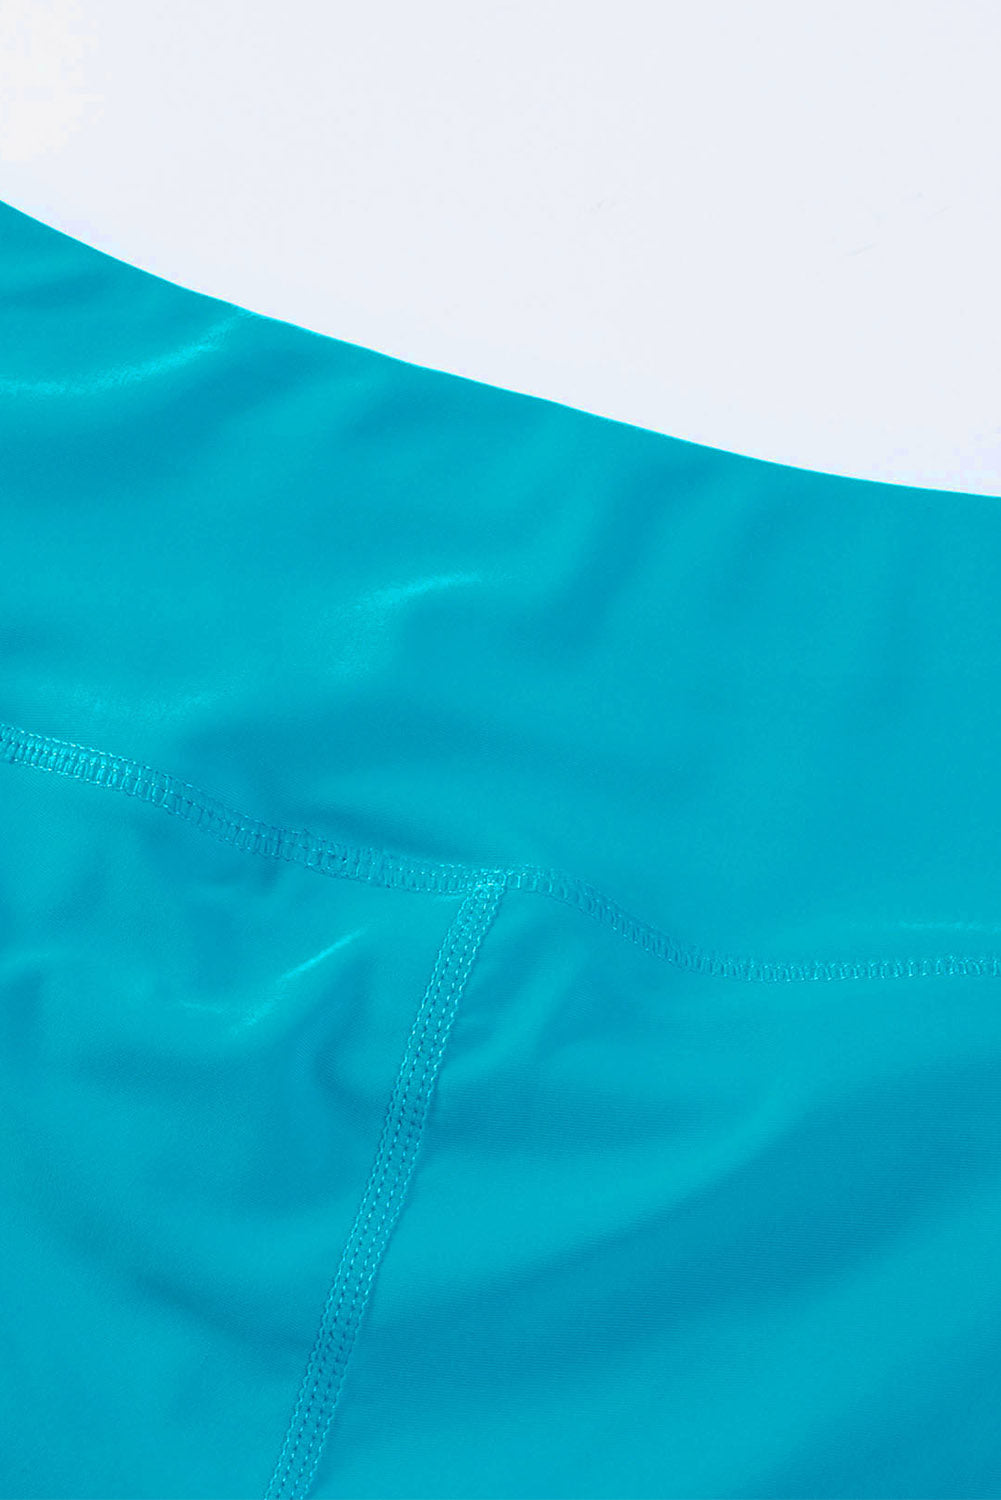 LC472196-104-S, LC472196-104-M, LC472196-104-L, LC472196-104-XL, LC472196-104-2XL, LC472196-104-3XL, Sky Blue Womens Swim Shorts Solid High Waist Swimwear Shorts with Pockets